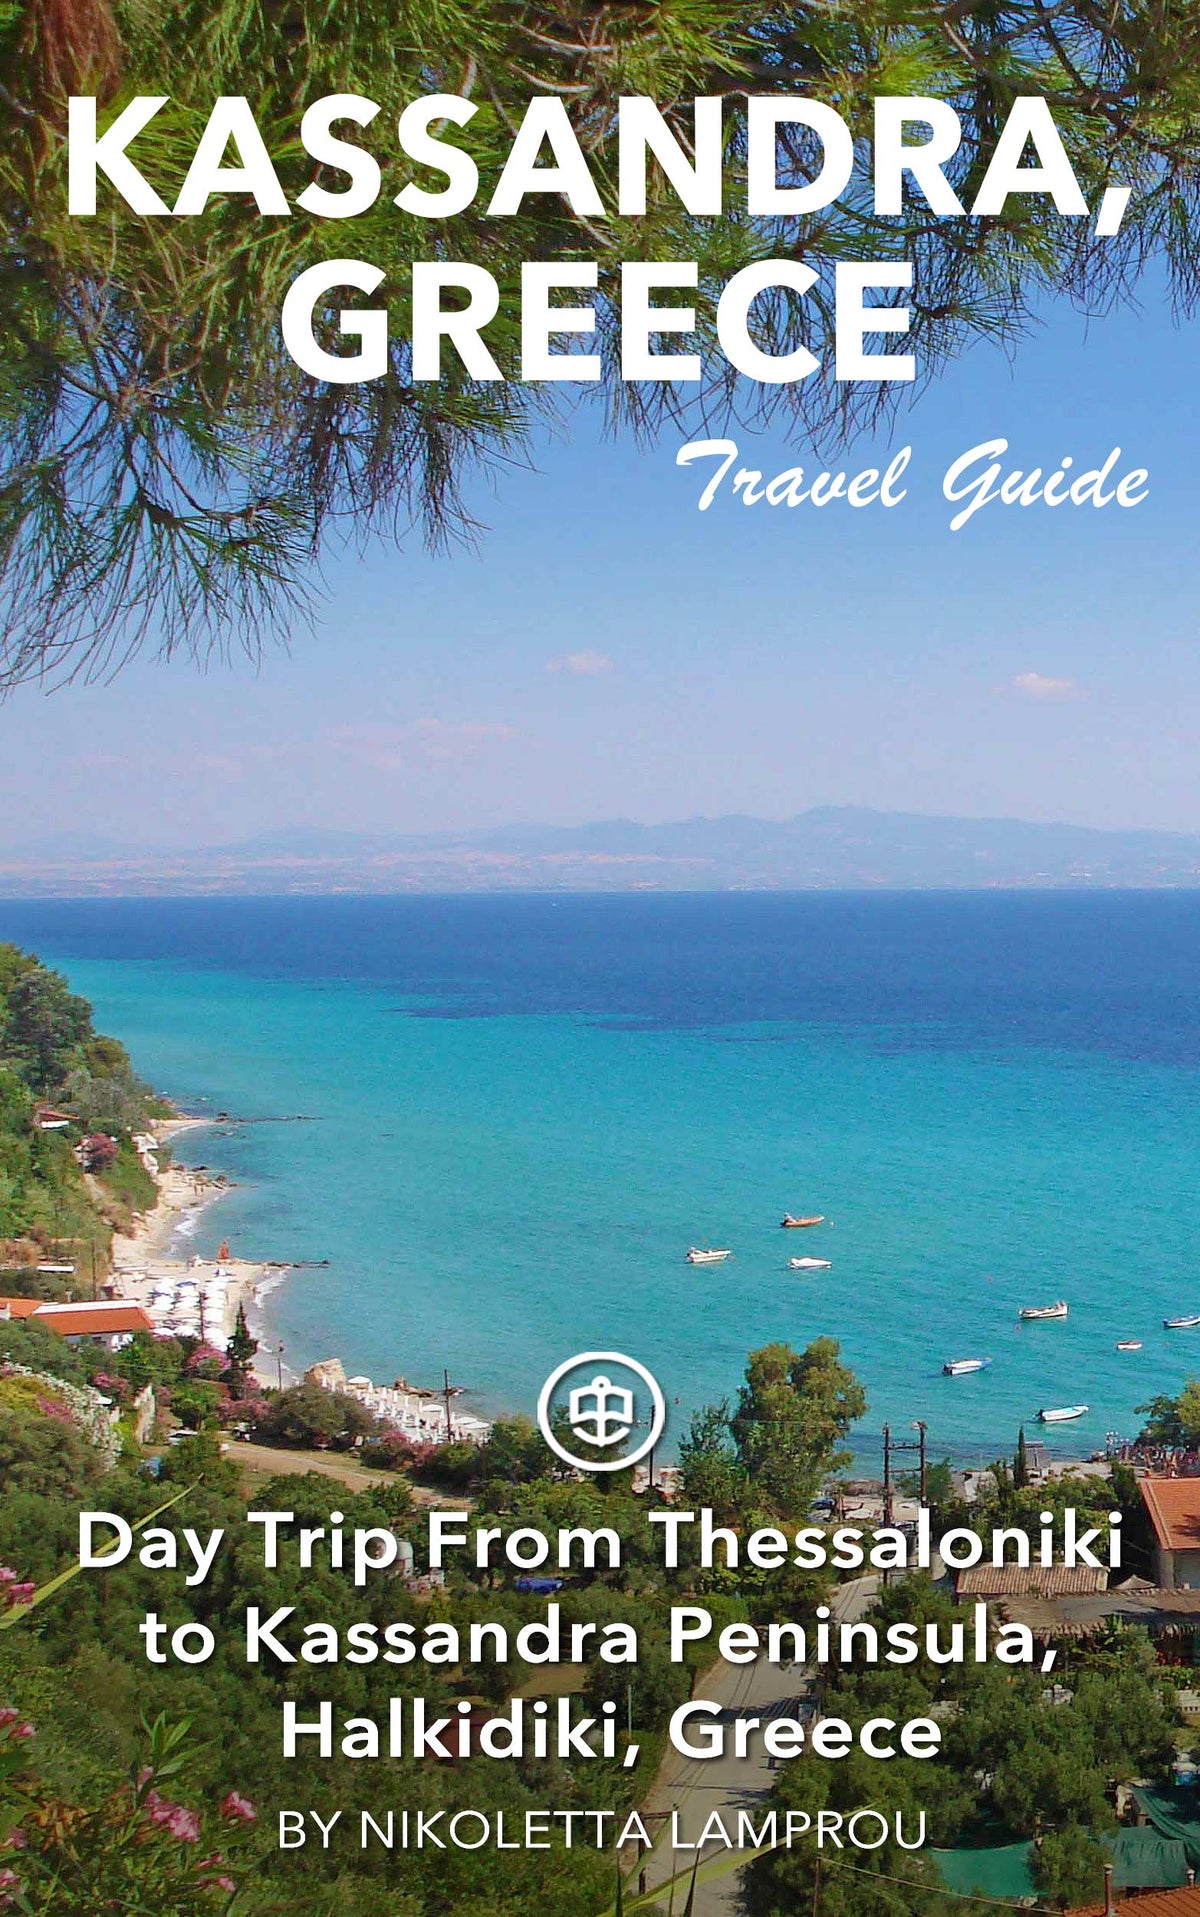 Day Trip From Thessaloniki to Kassandra Peninsula, Halkidiki, Greece